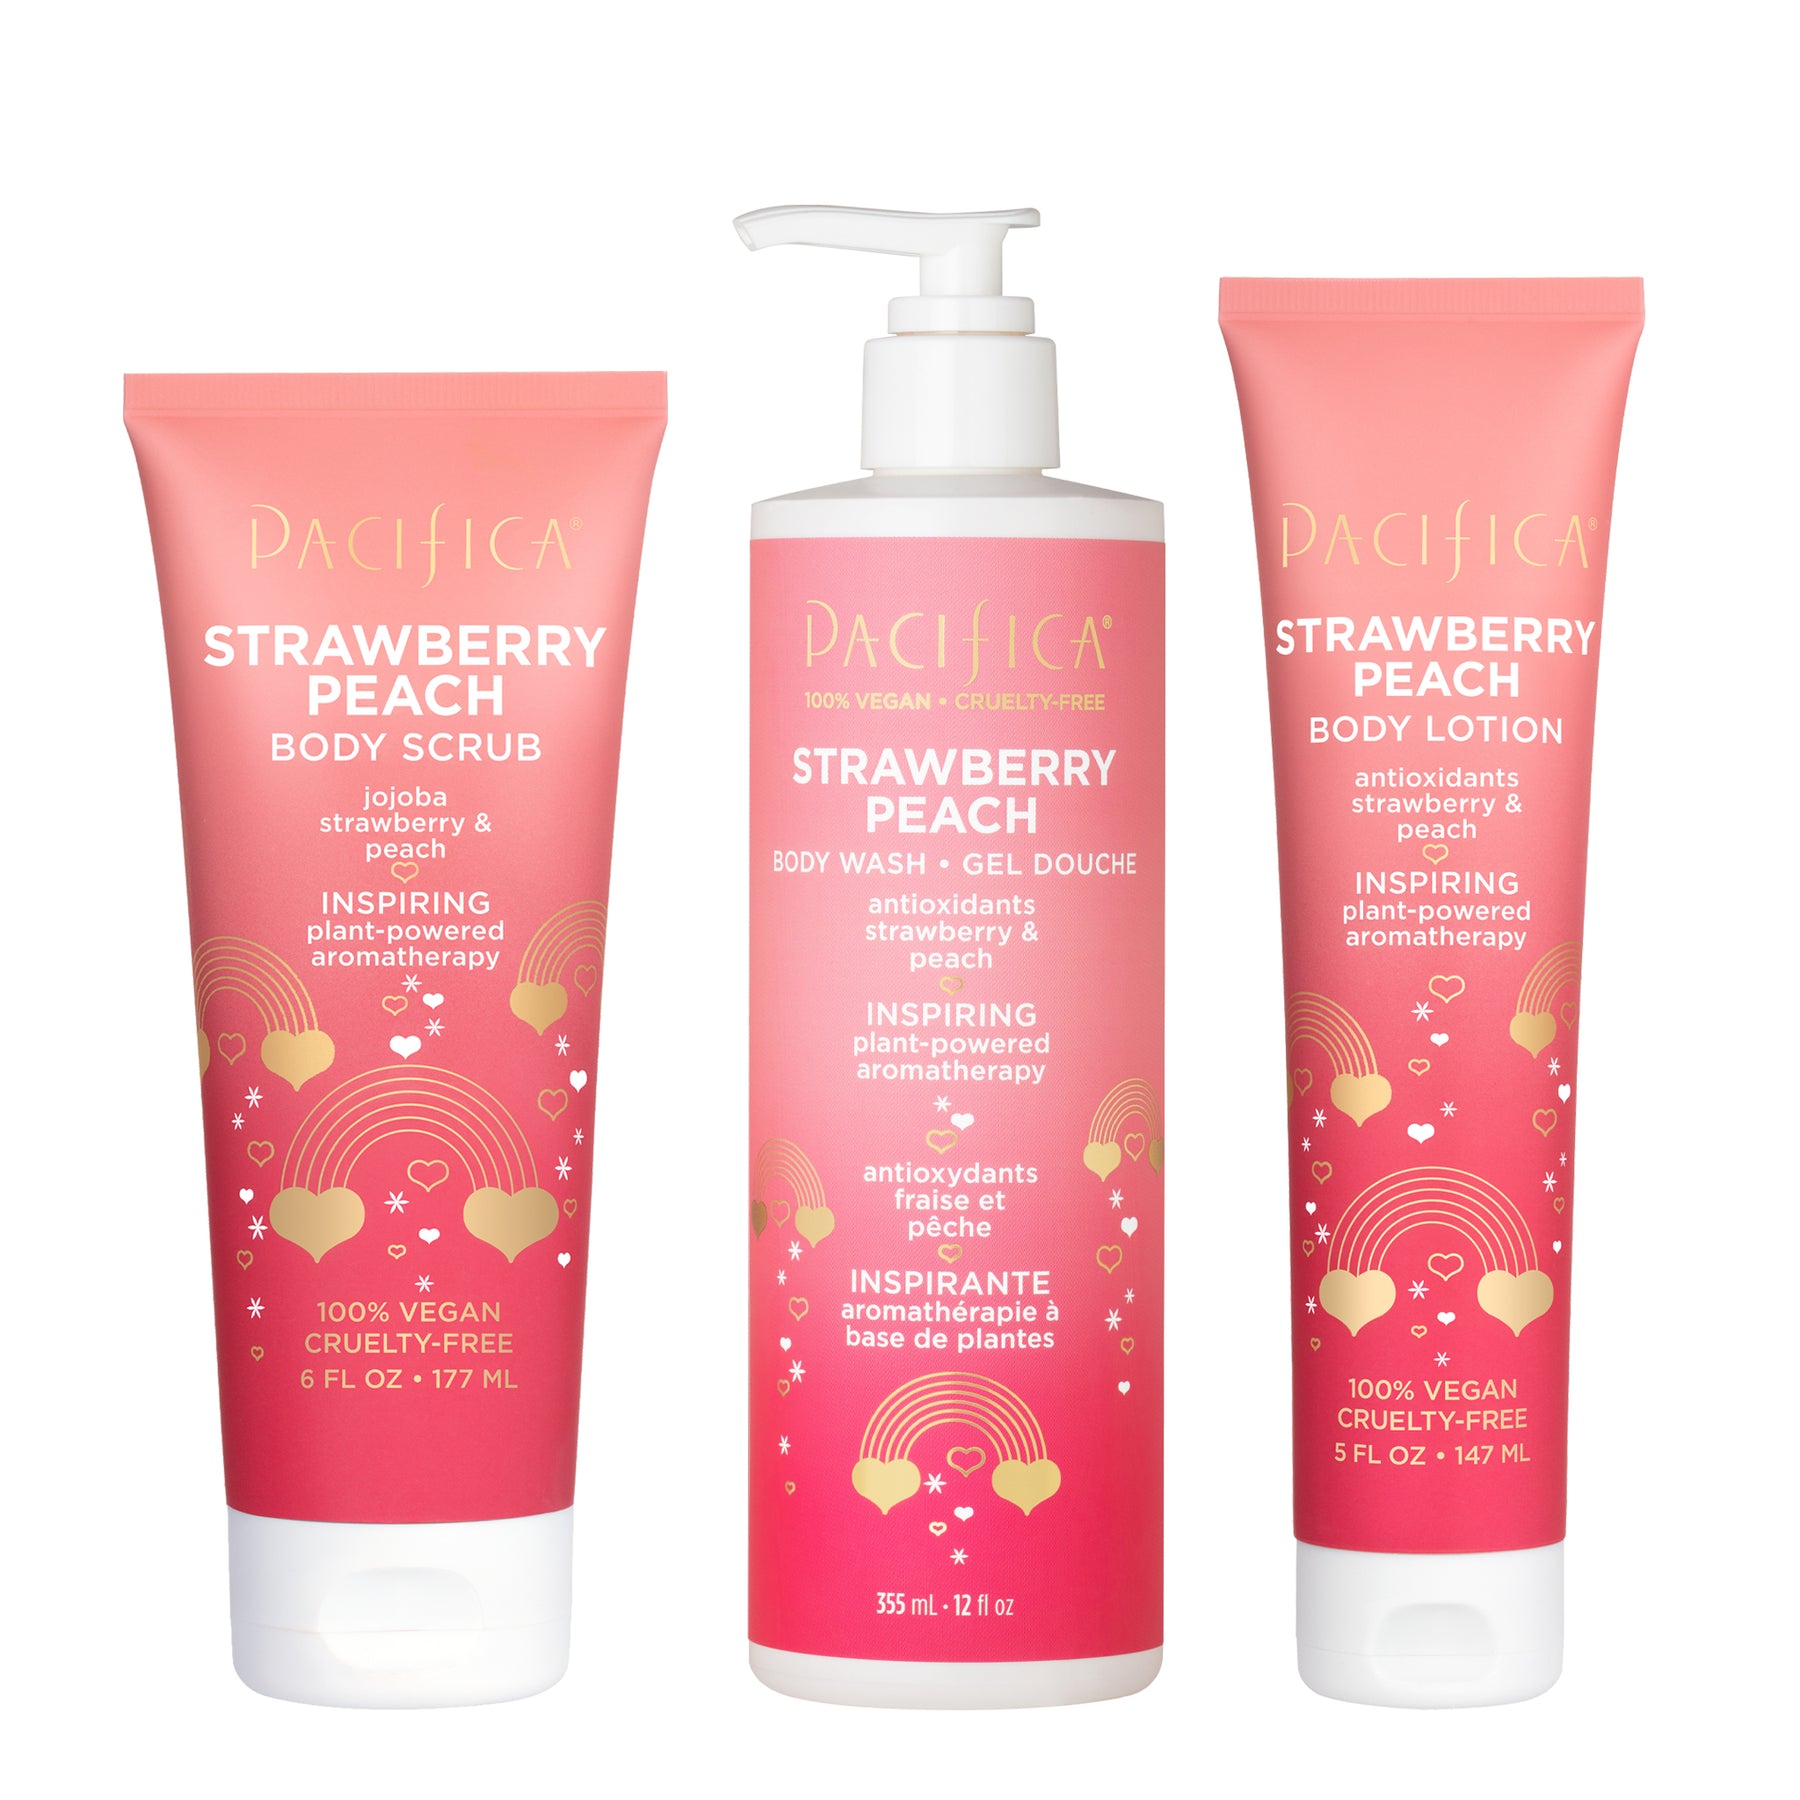 Strawberry Shortcake Bath & Body Skincare Bundle; moisturizers for dry  skin.